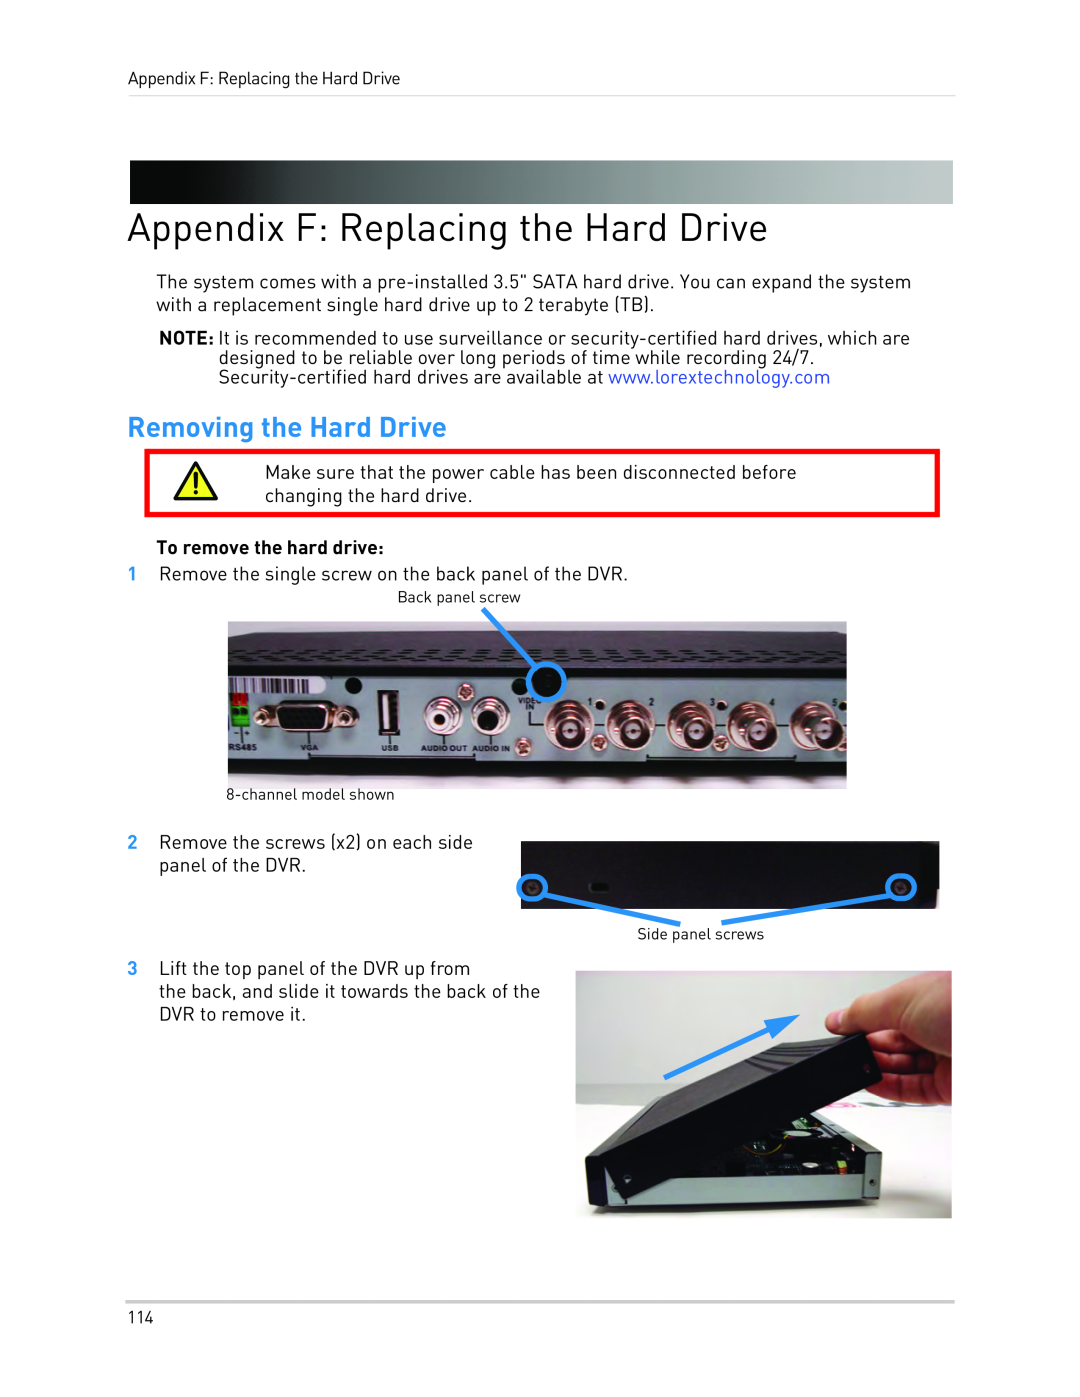 LOREX Technology LH340 EDGE3 Appendix F: Replacing the Hard Drive, Removing the Hard Drive, To remove the hard drive 